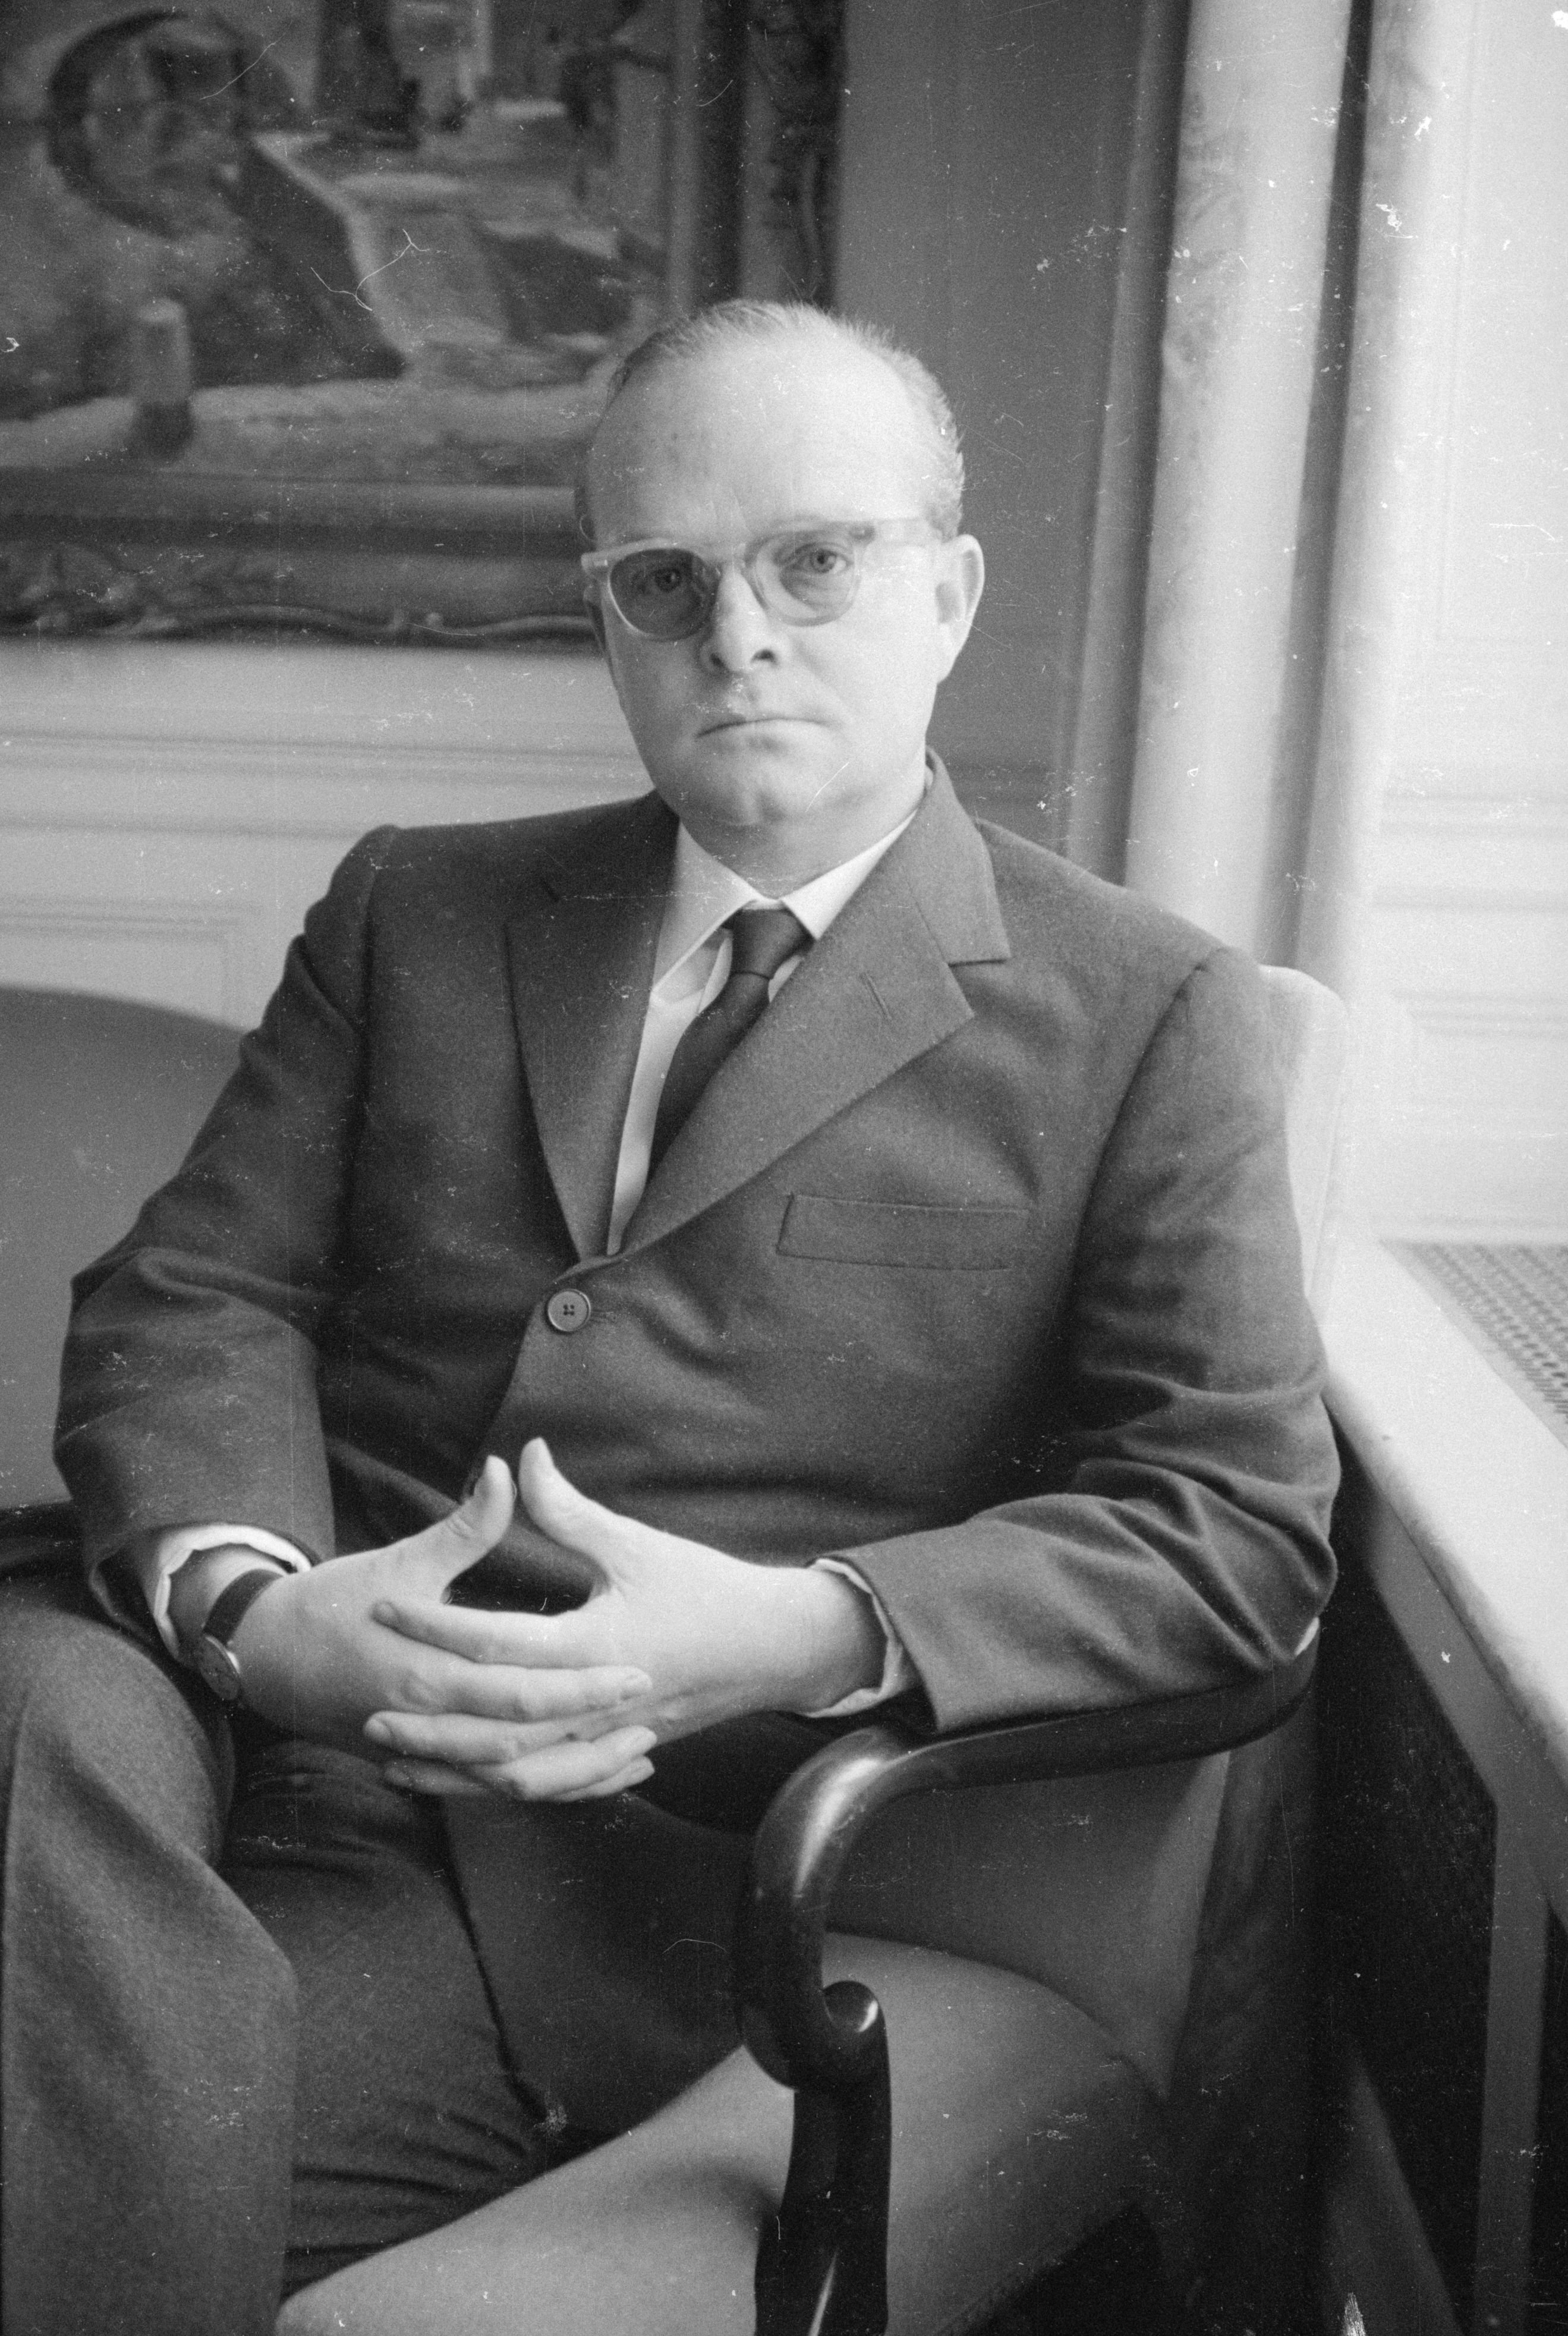 Truman Capote Latest Articles